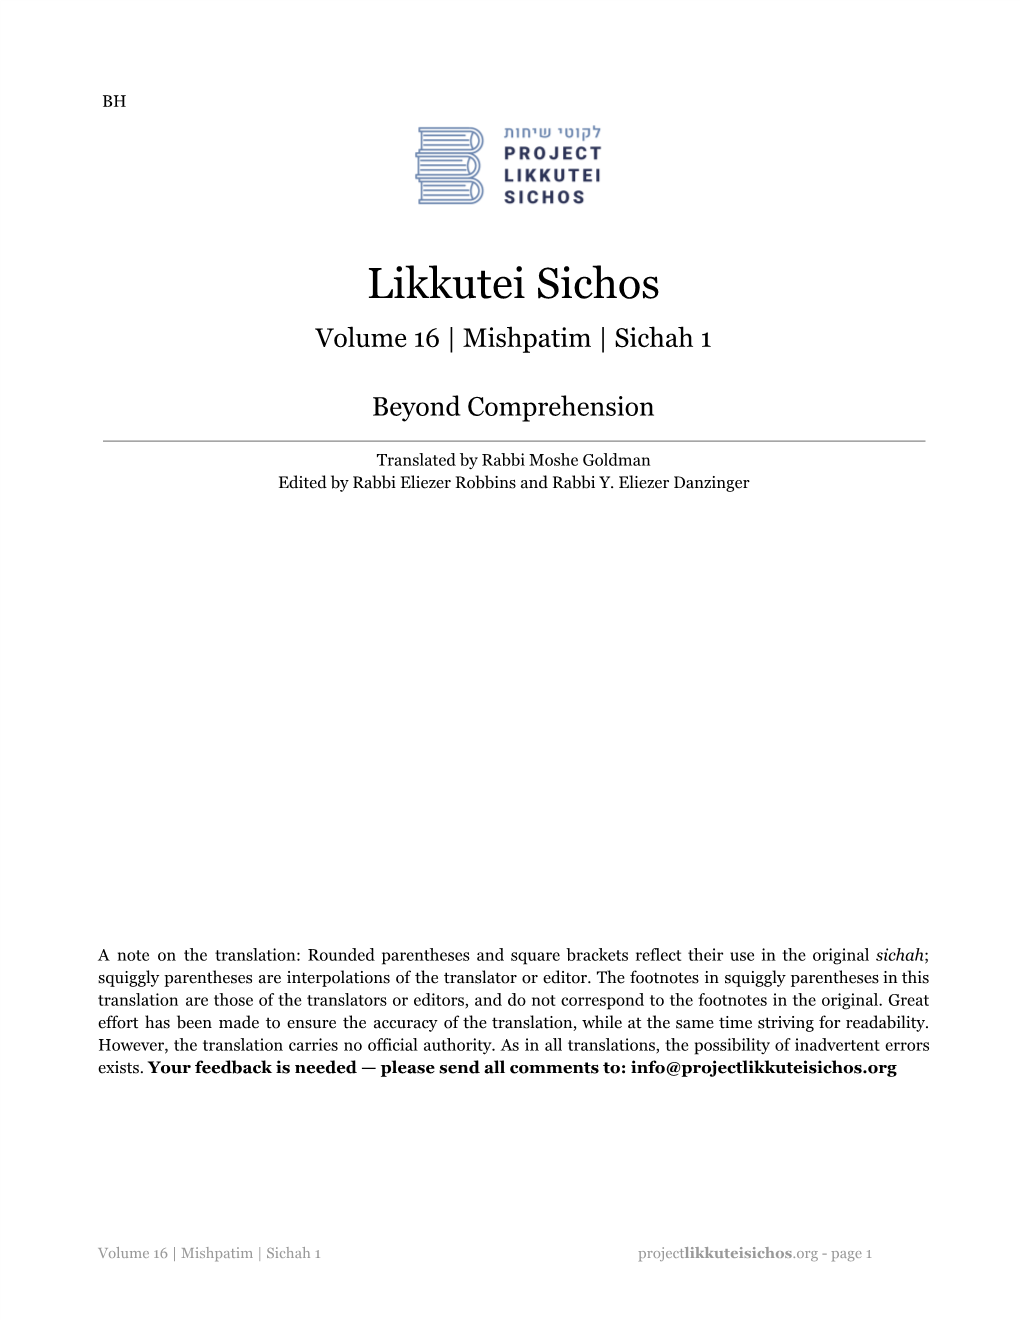 Likkutei Sichos Volume 16 | Mishpatim | Sichah 1